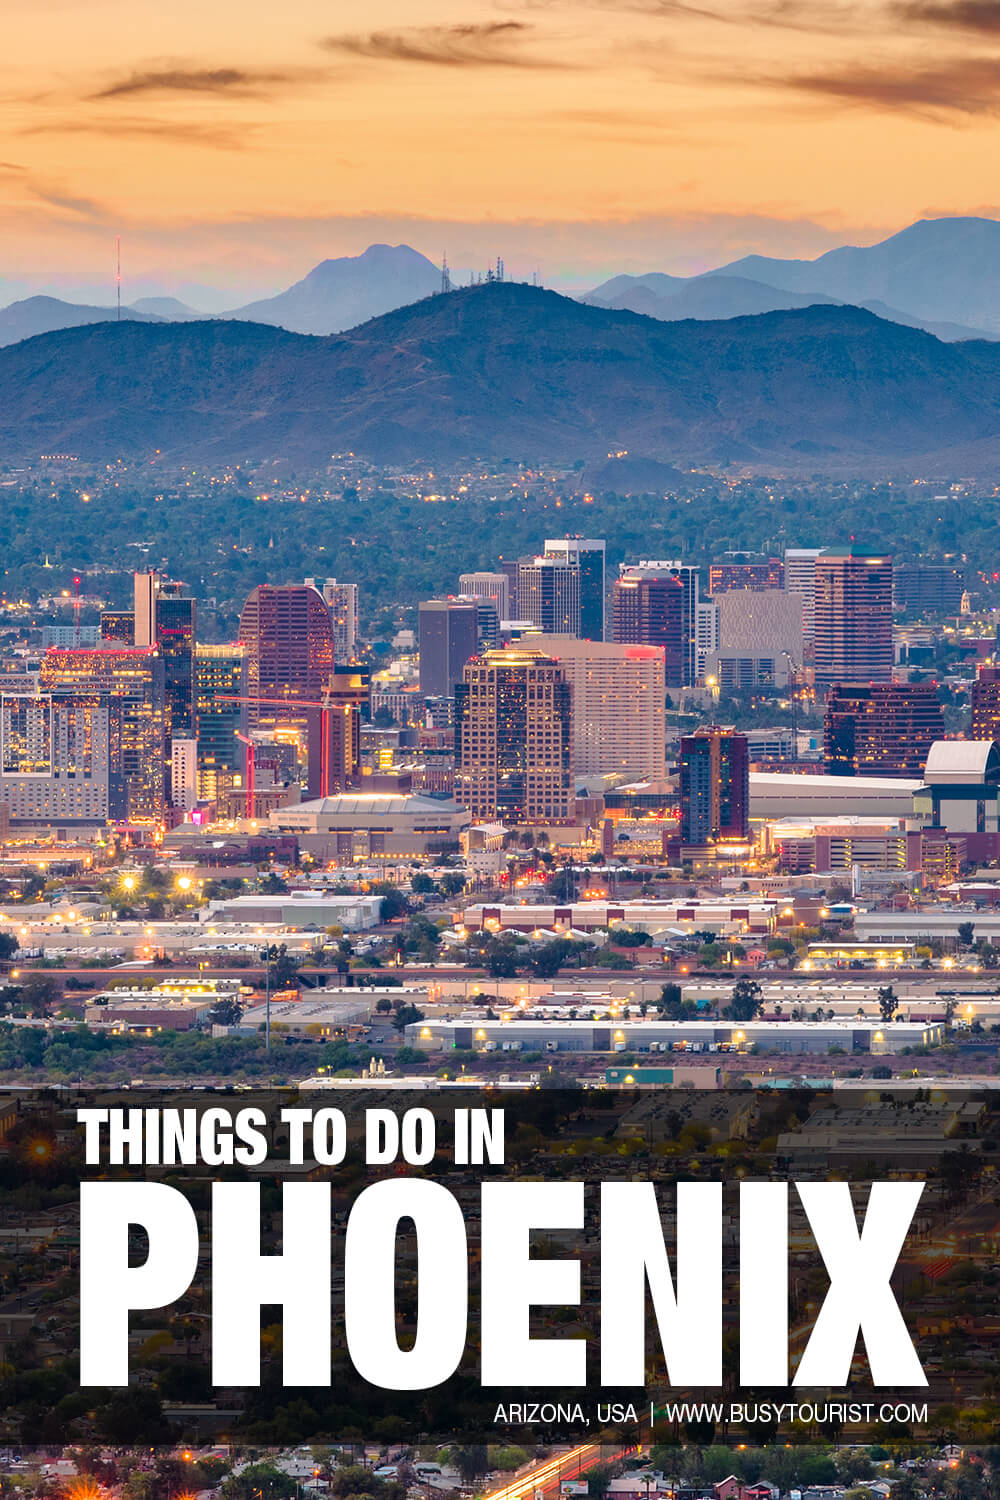 60 Best & Fun Things To Do Phoenix (Arizona) Attractions & Activities